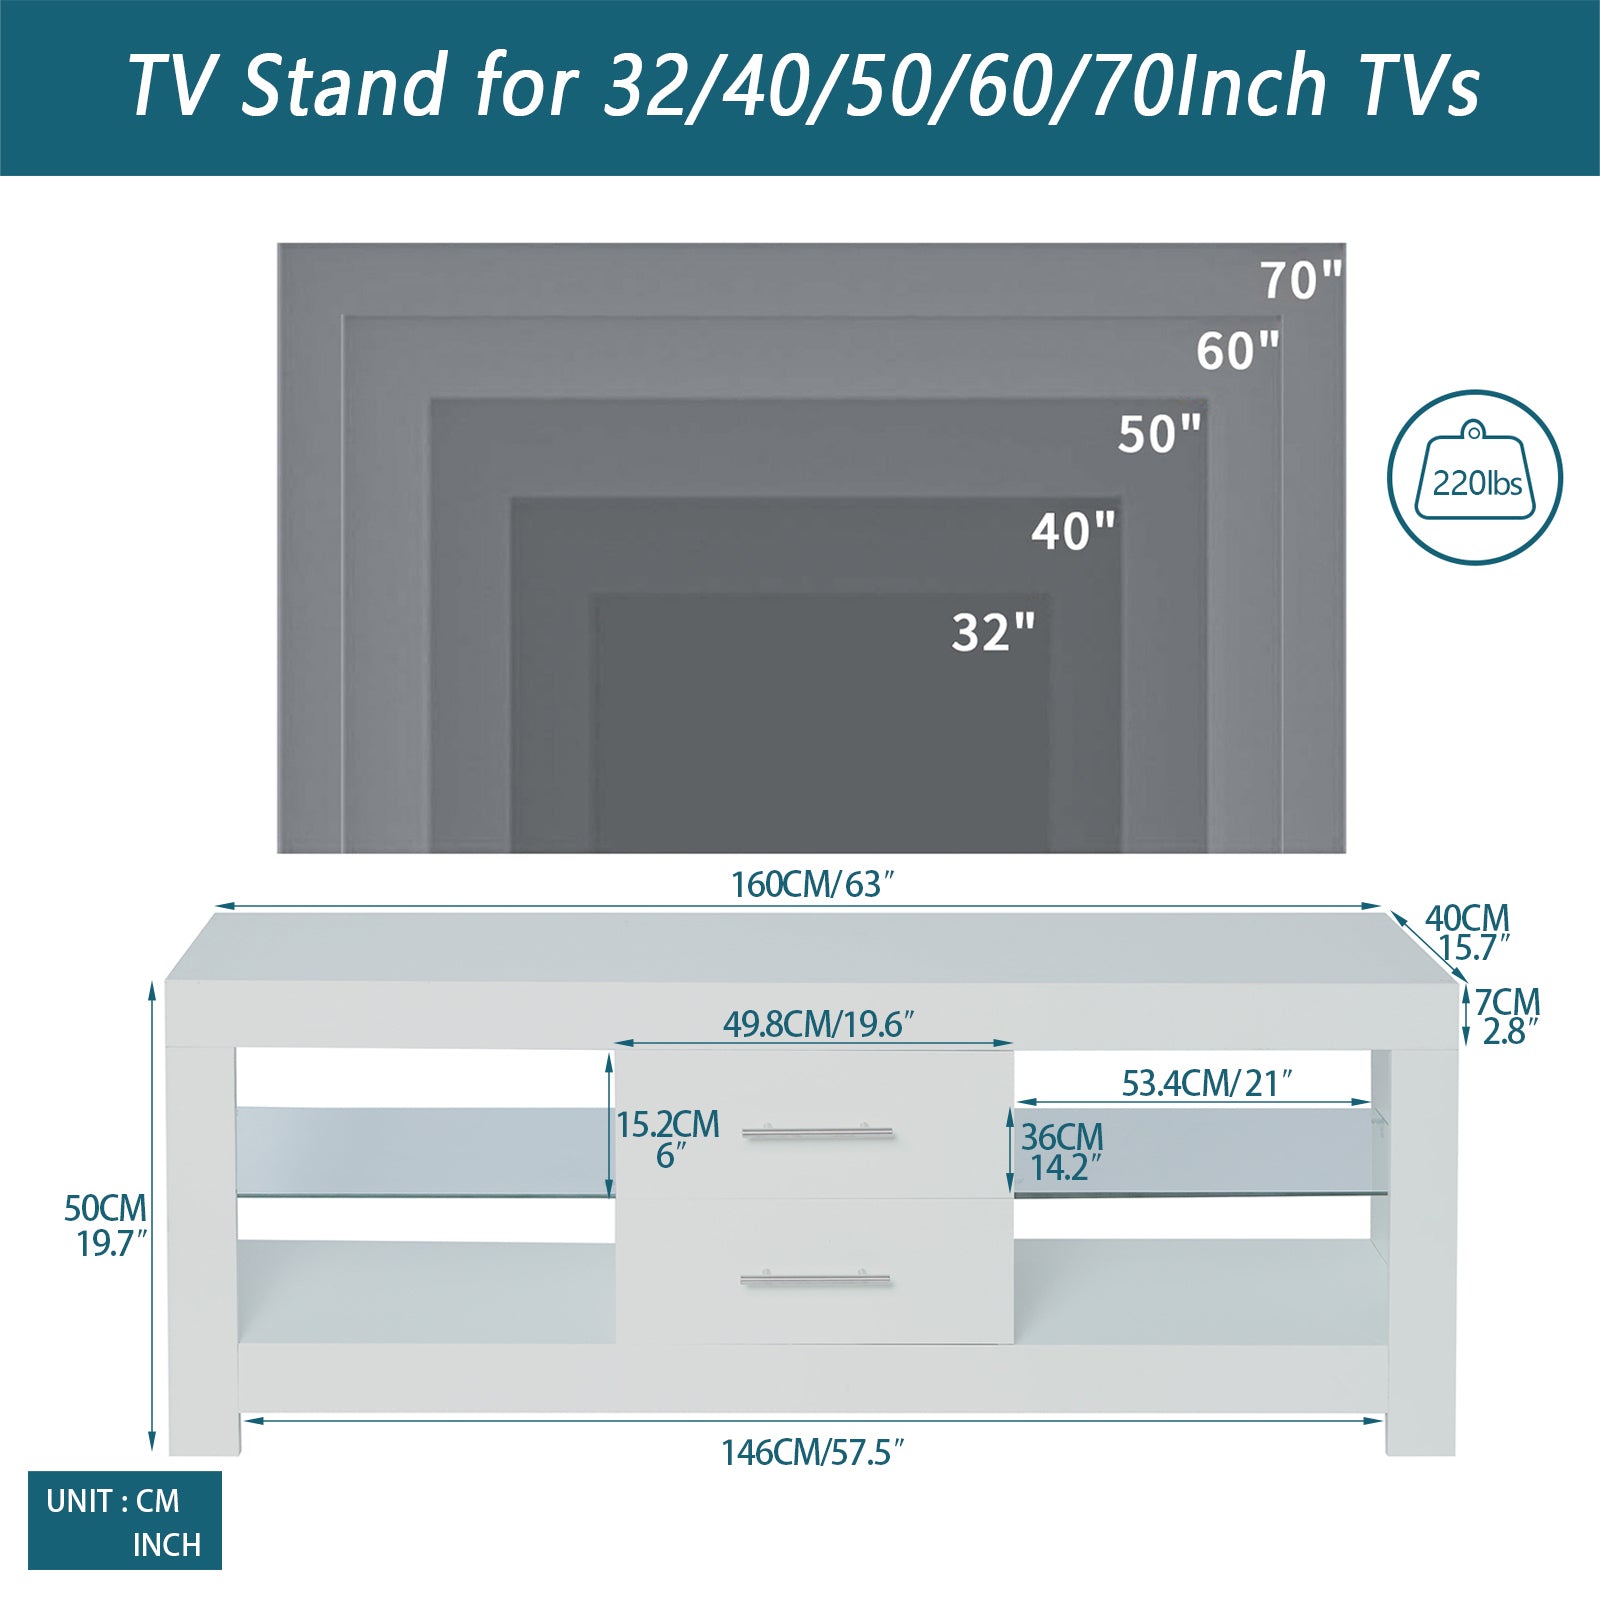 1.6M White Modern TV Stand with LED Light (White)